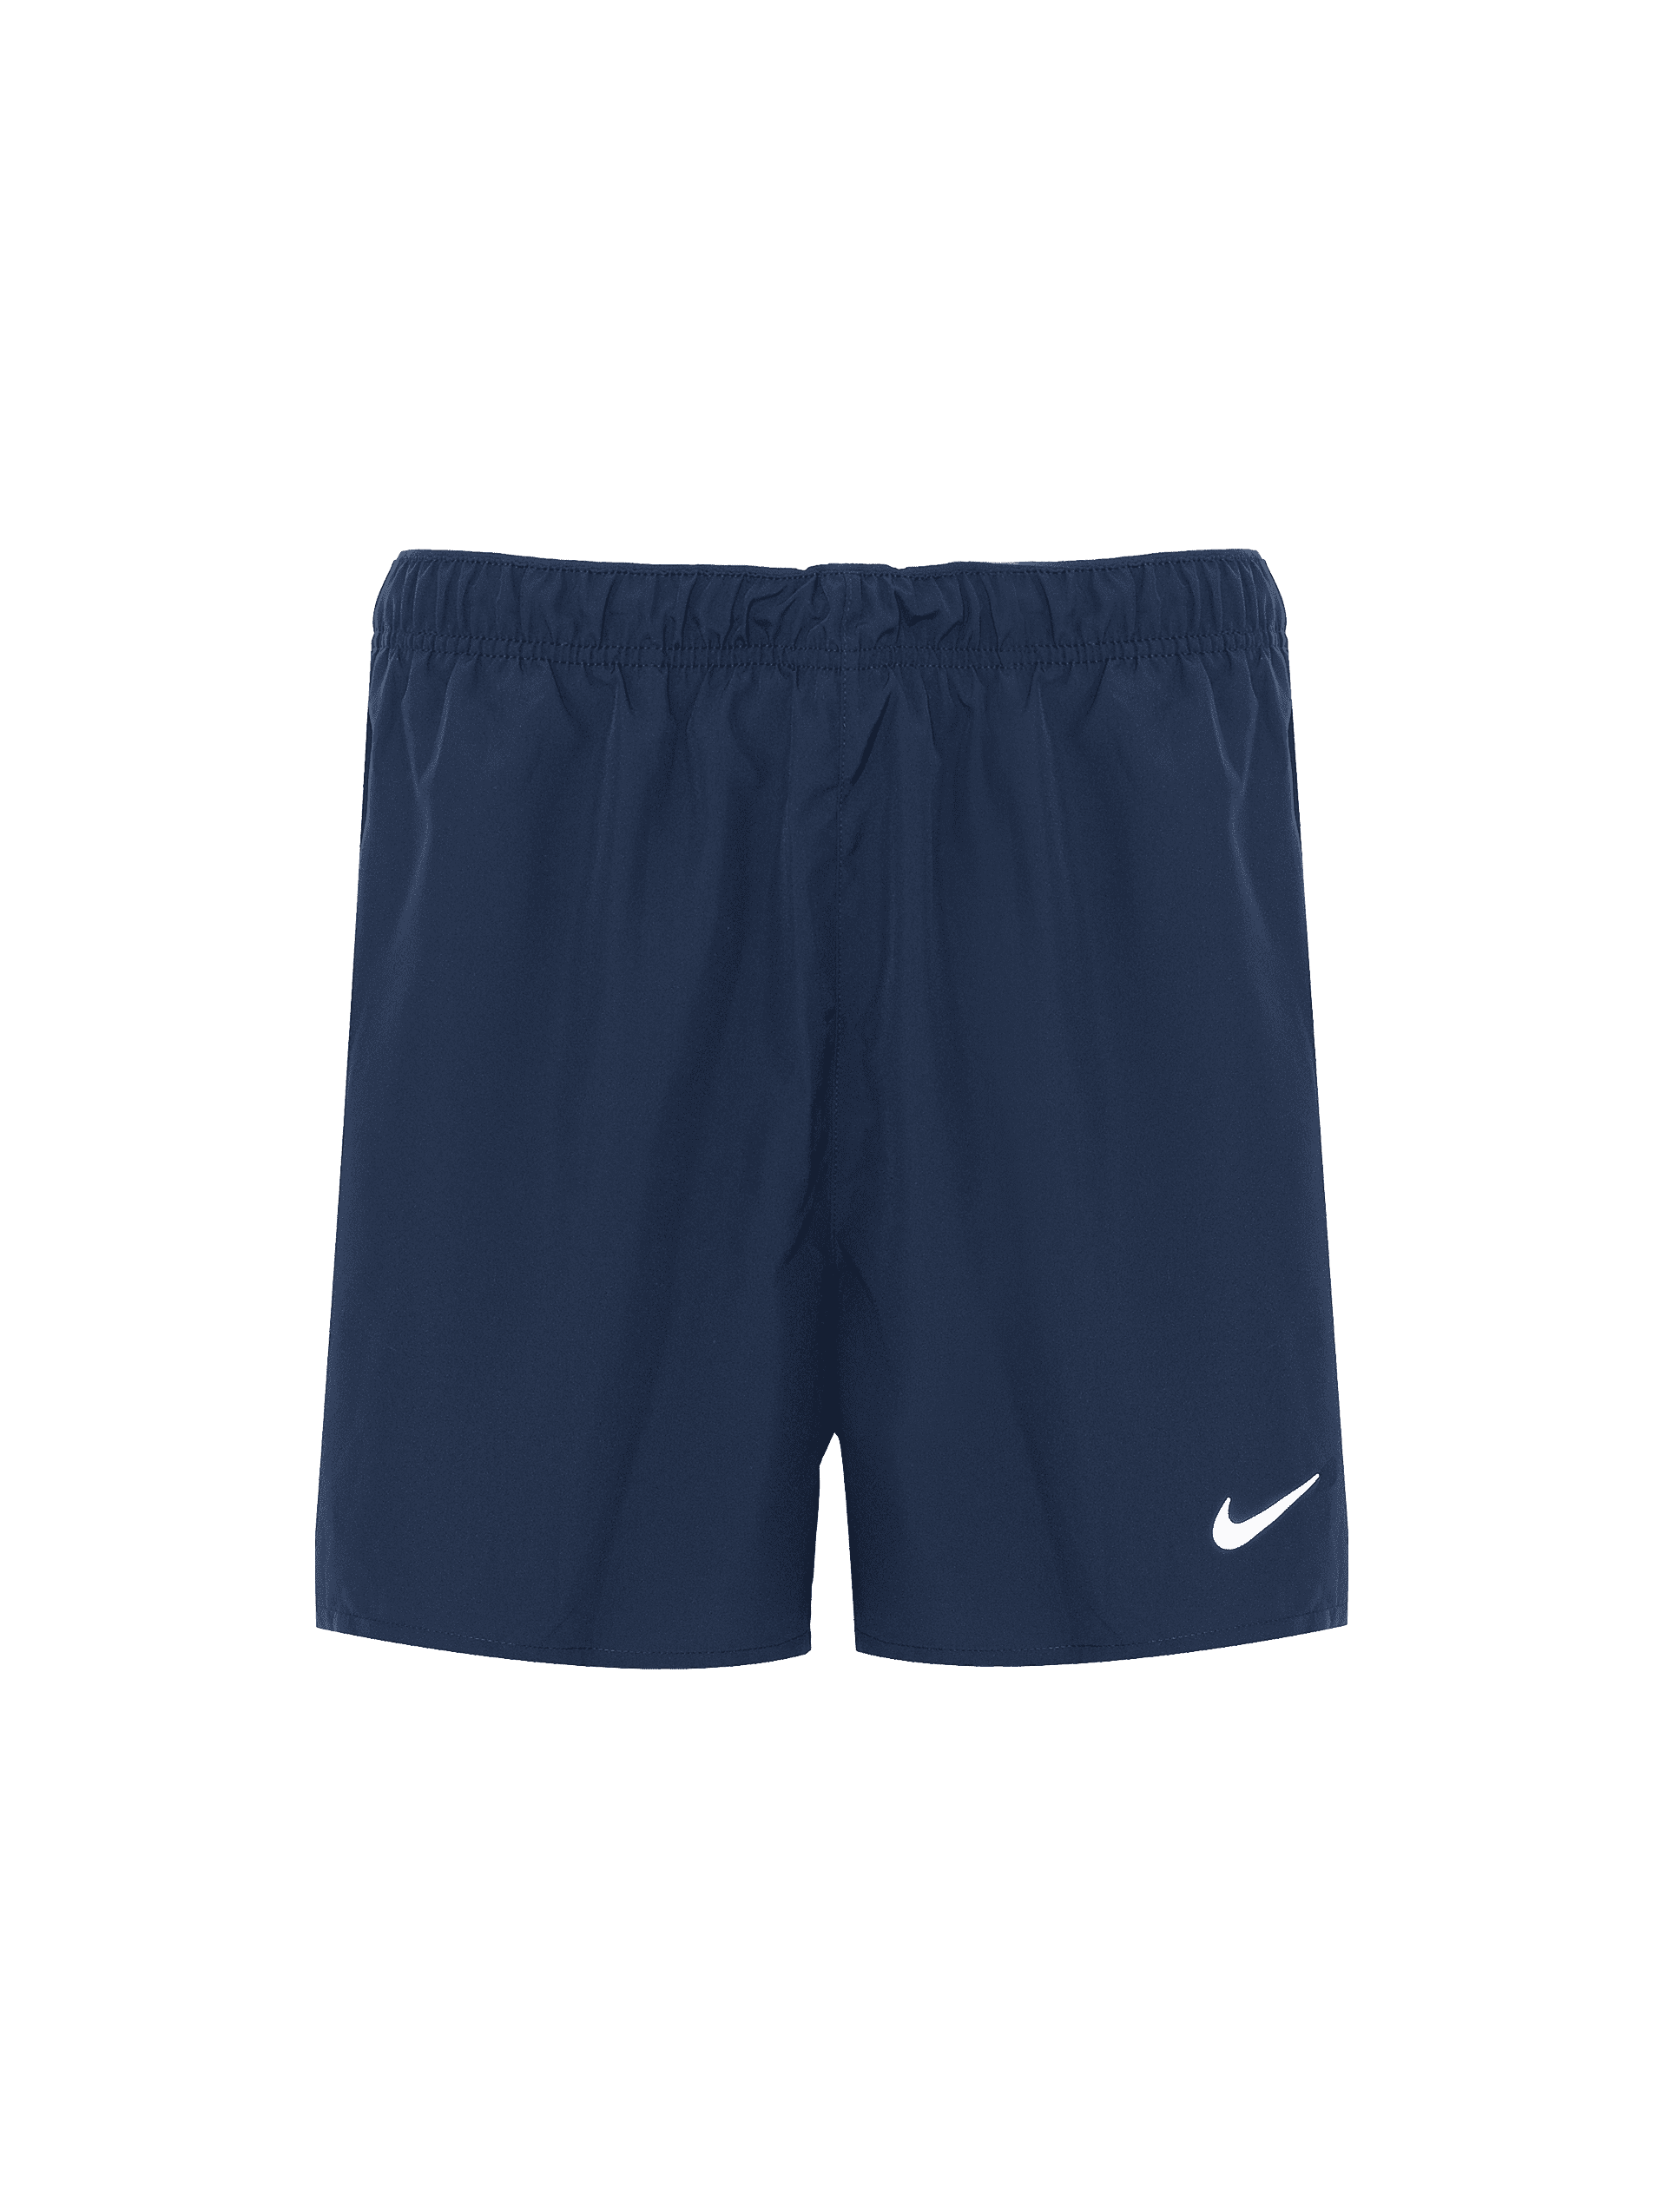 Shorts Nike Challenger 5Bf Masculino